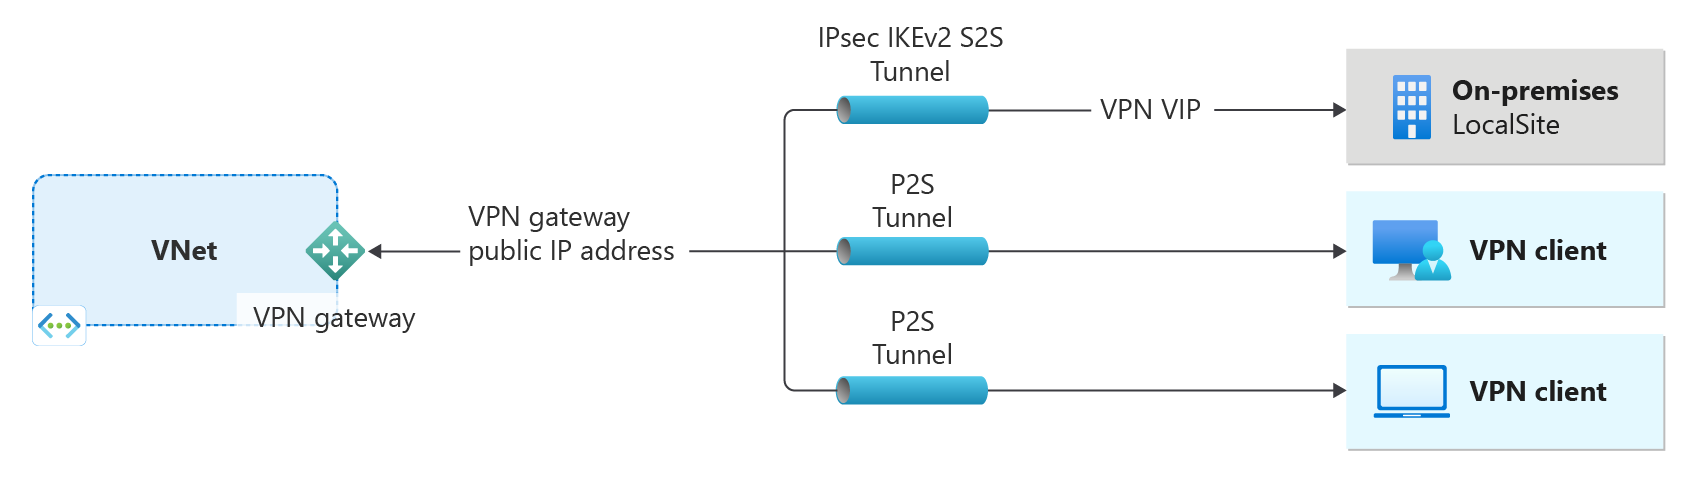 VNet and VPN gateway diagram